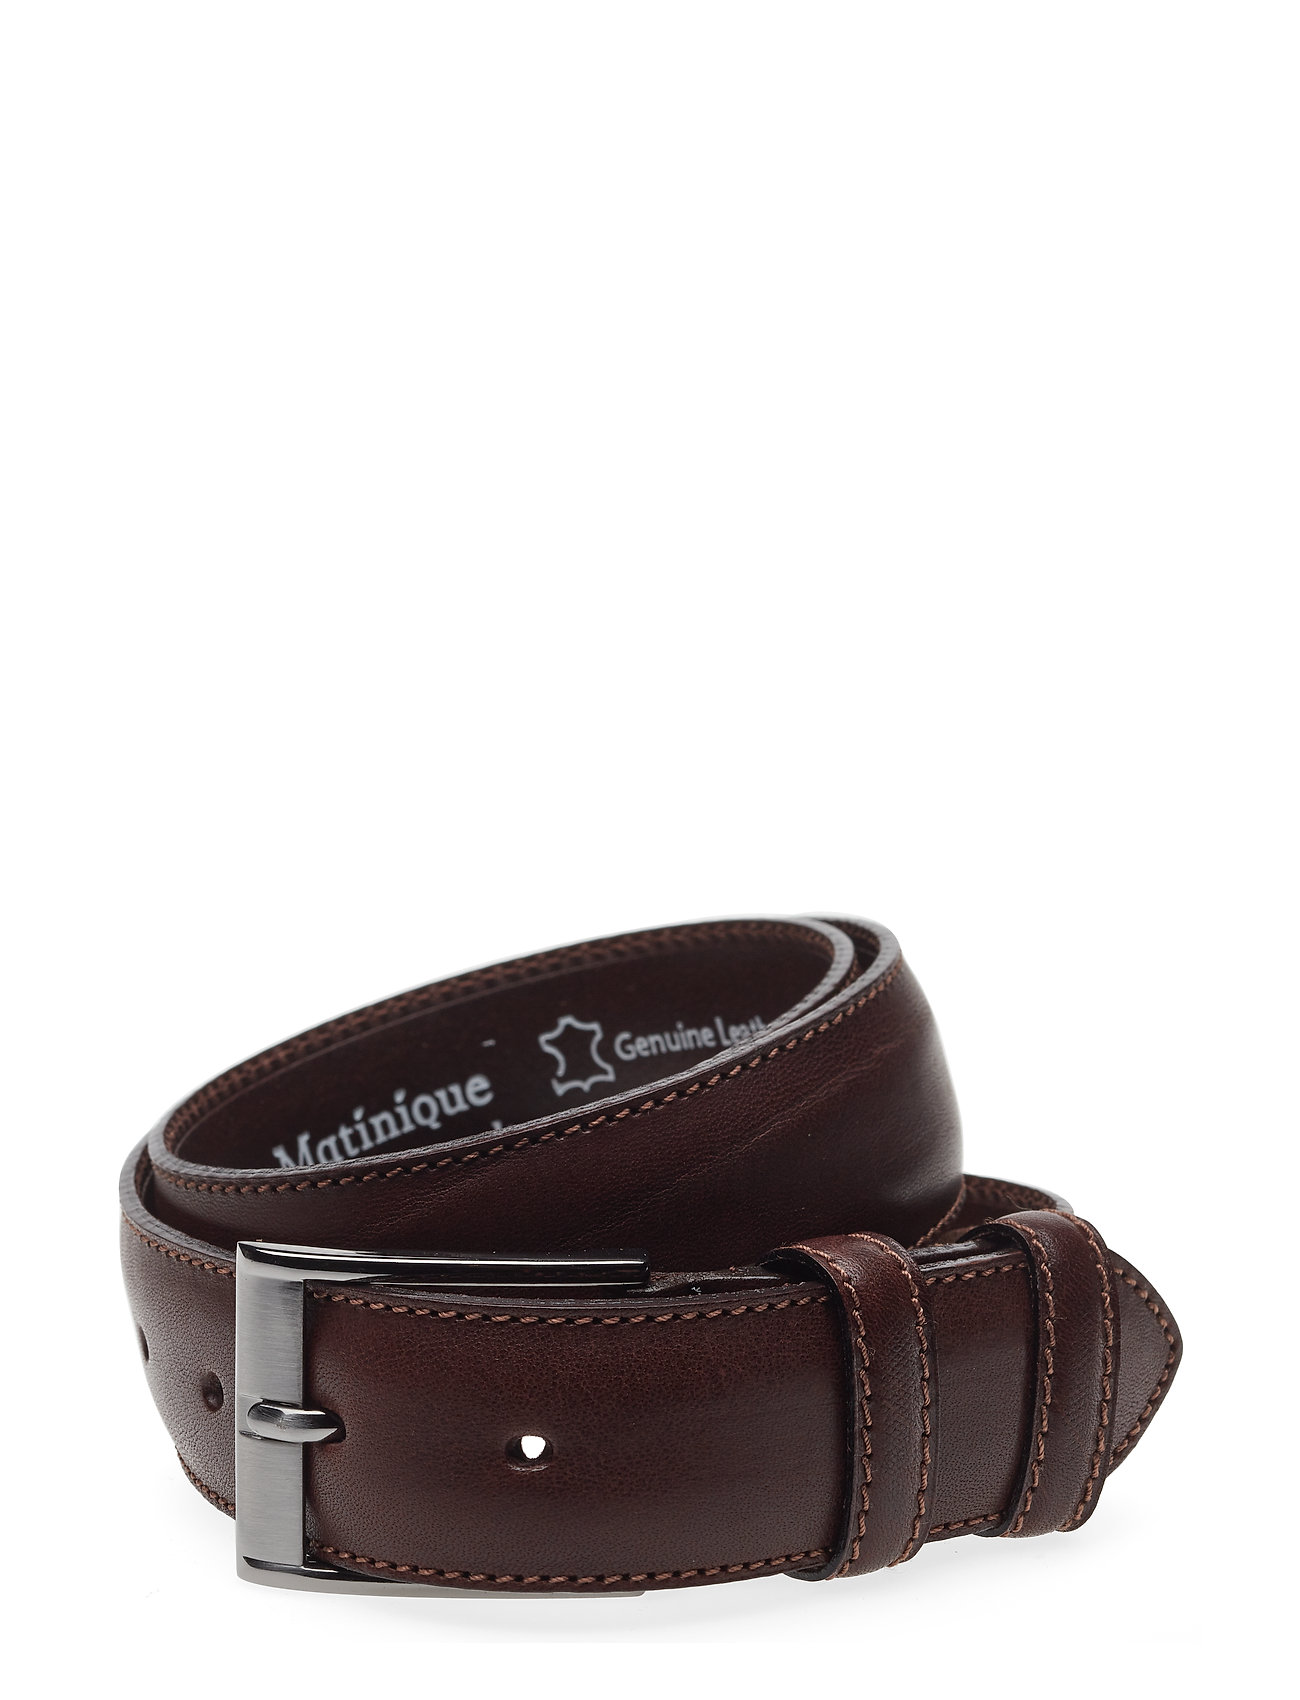 Essinot Accessories Belts Classic Belts Ruskea Matinique